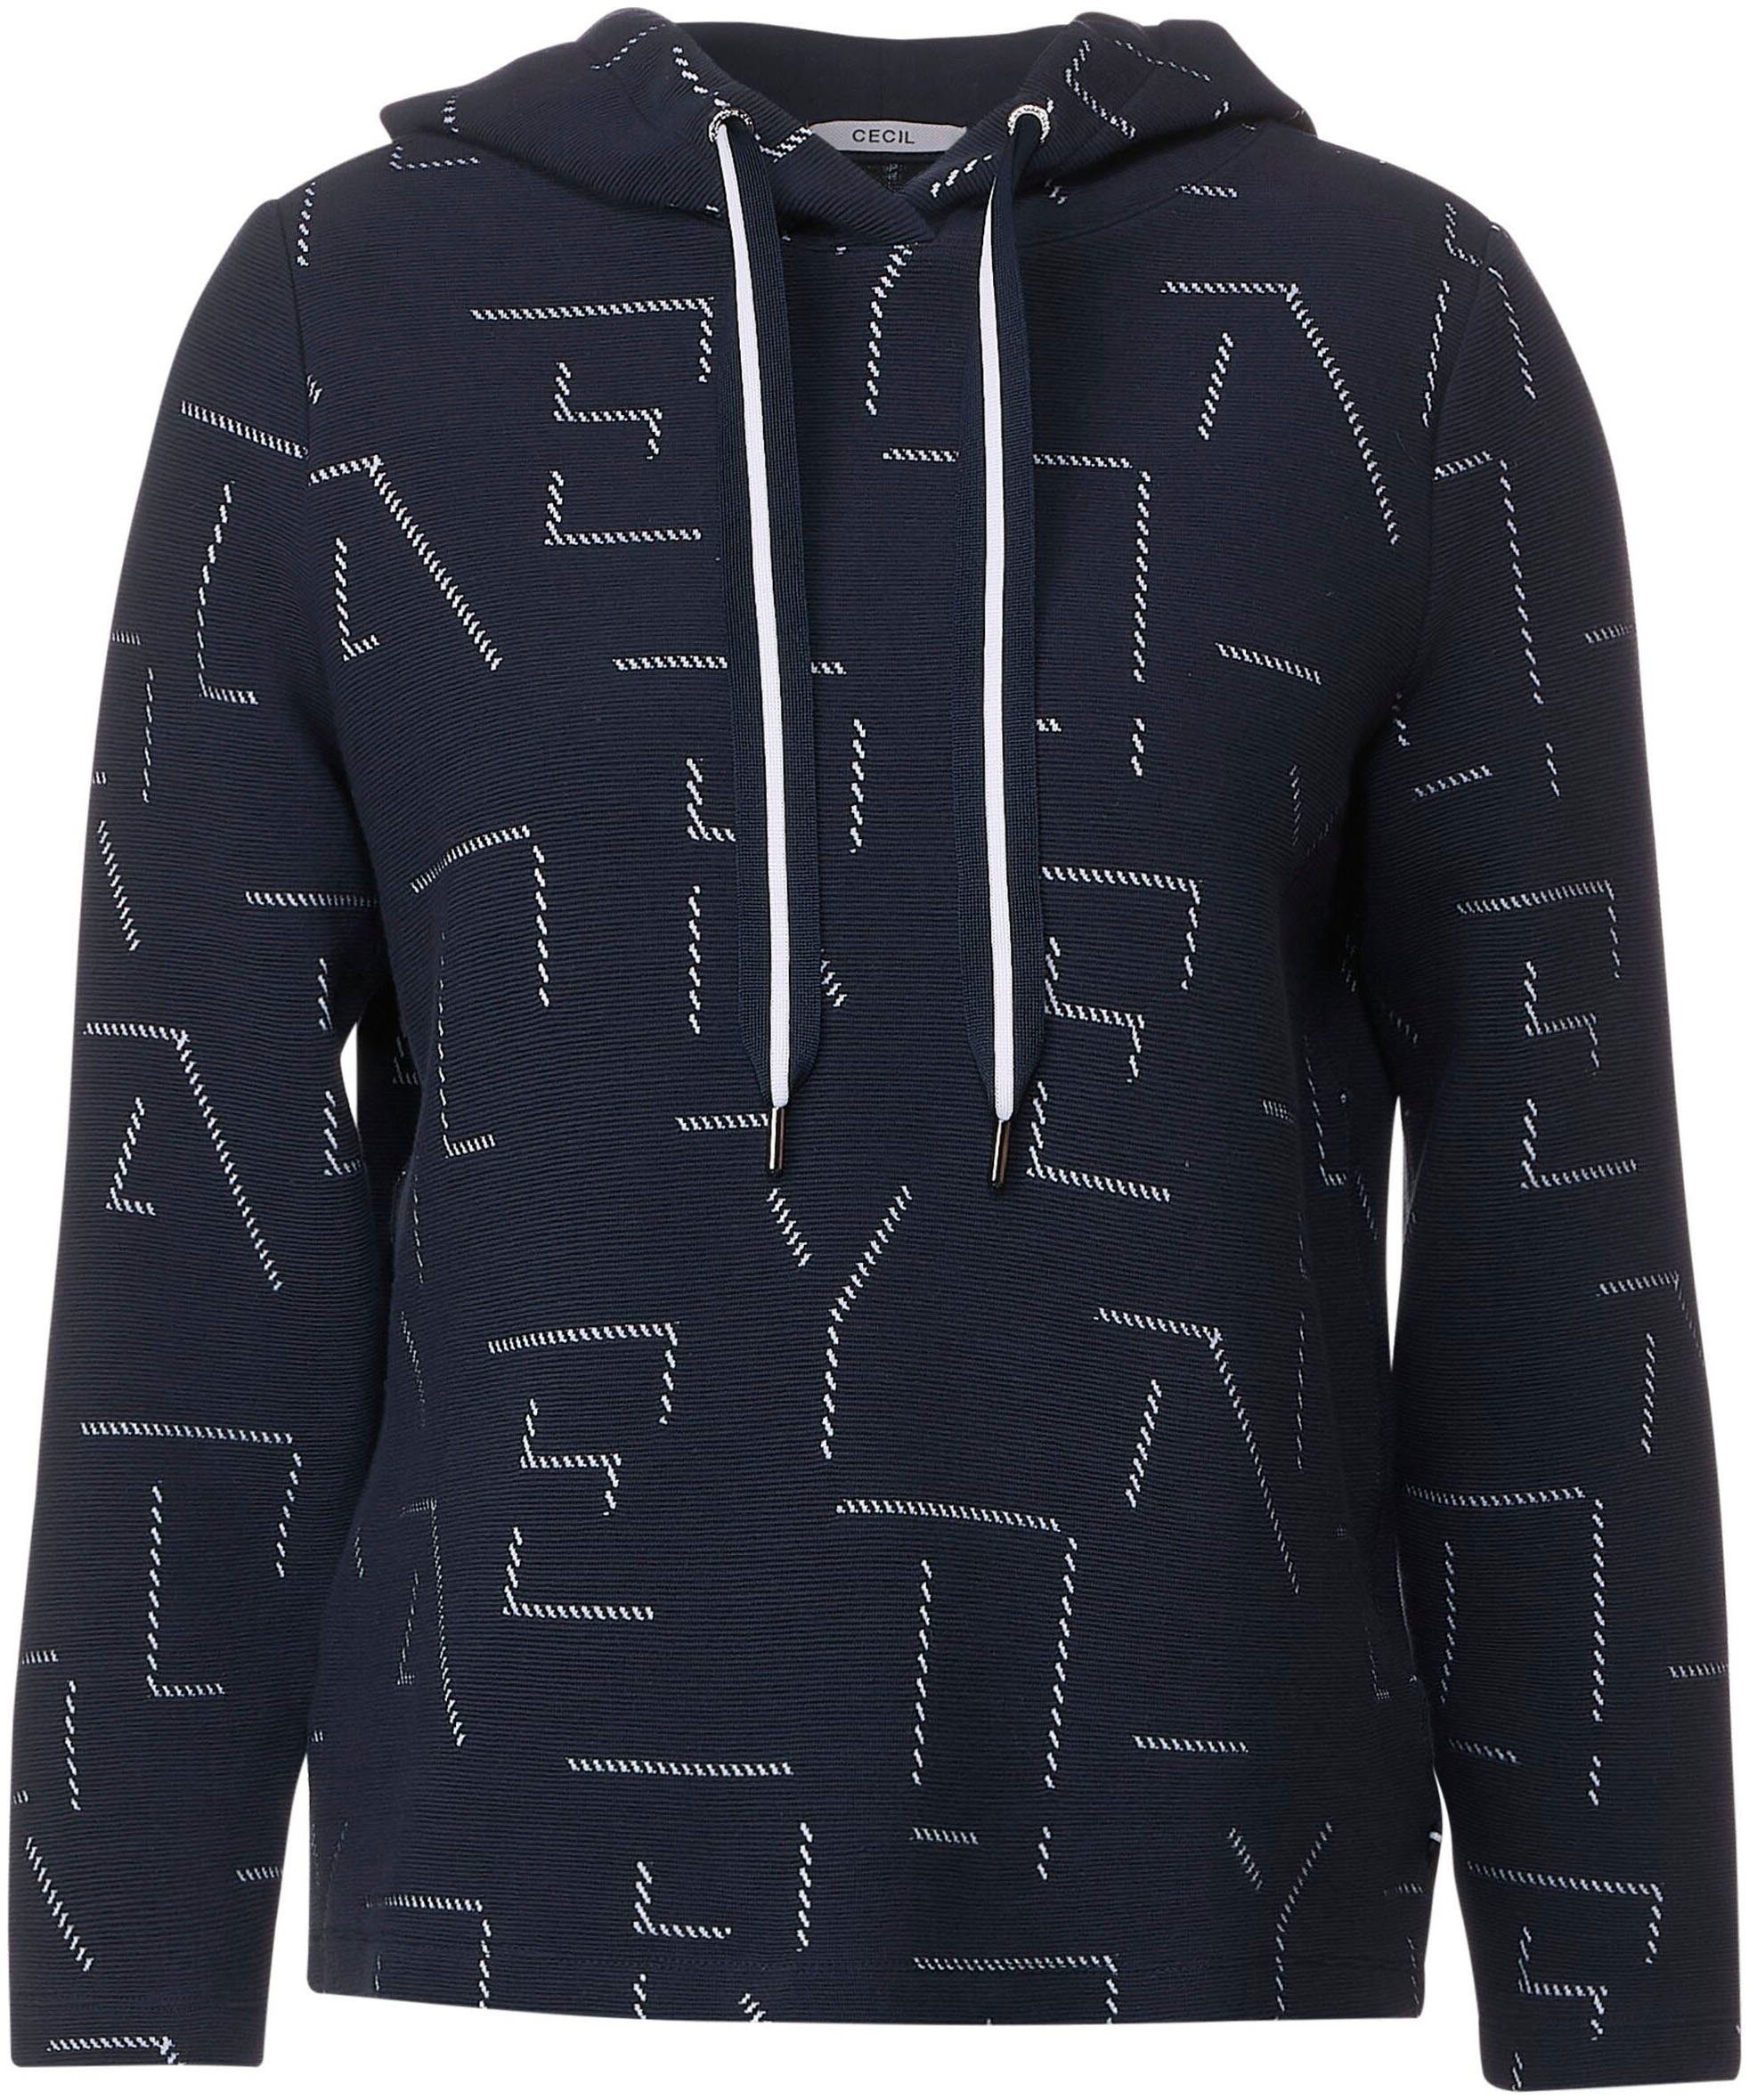 Sweatshirt mit night Cecil blue sky Jacquard-Muster einzigartigem